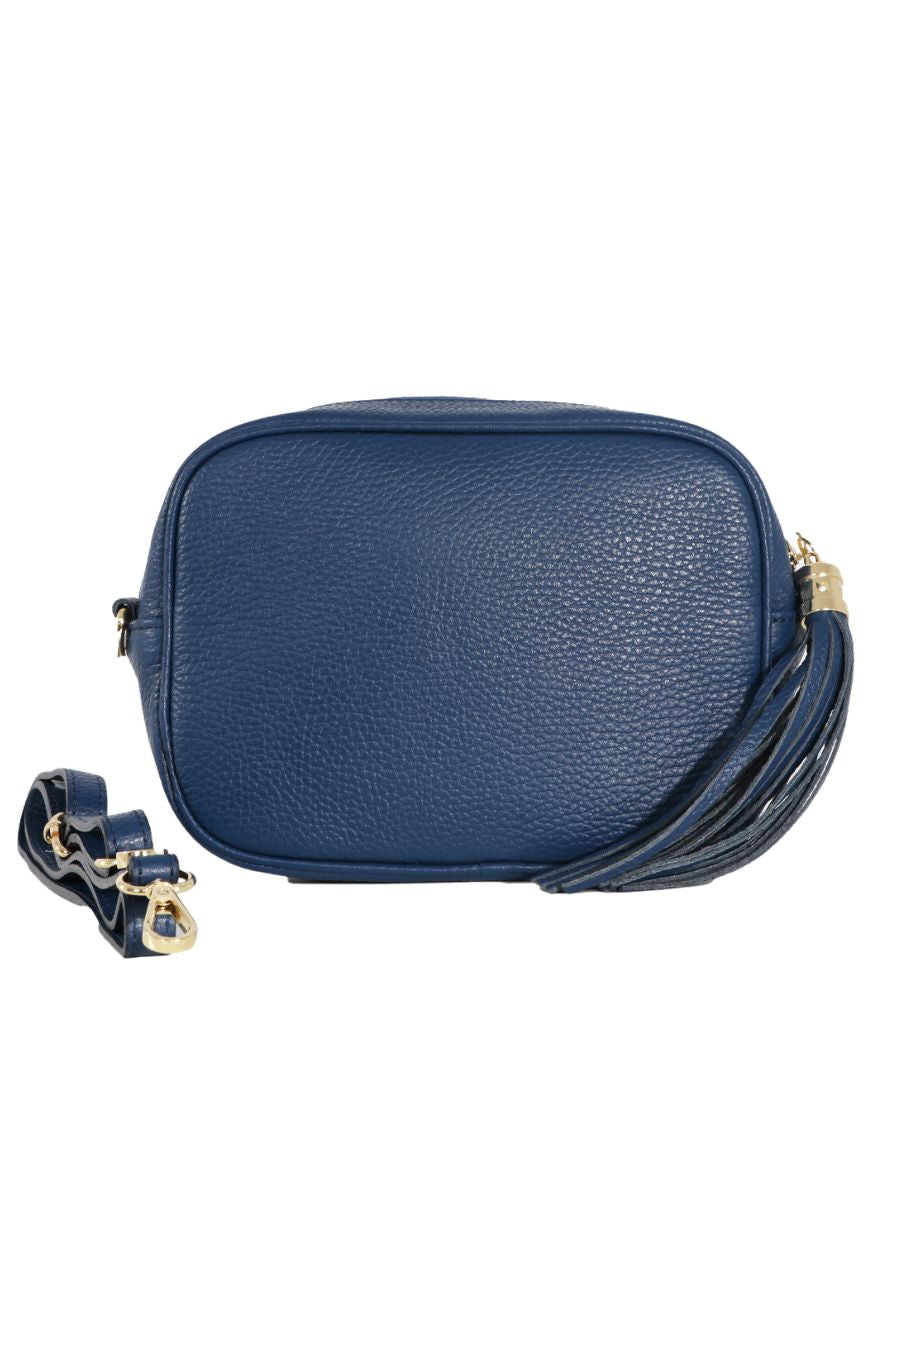 Navy Blue Genuine Italian Leather Camera Bag